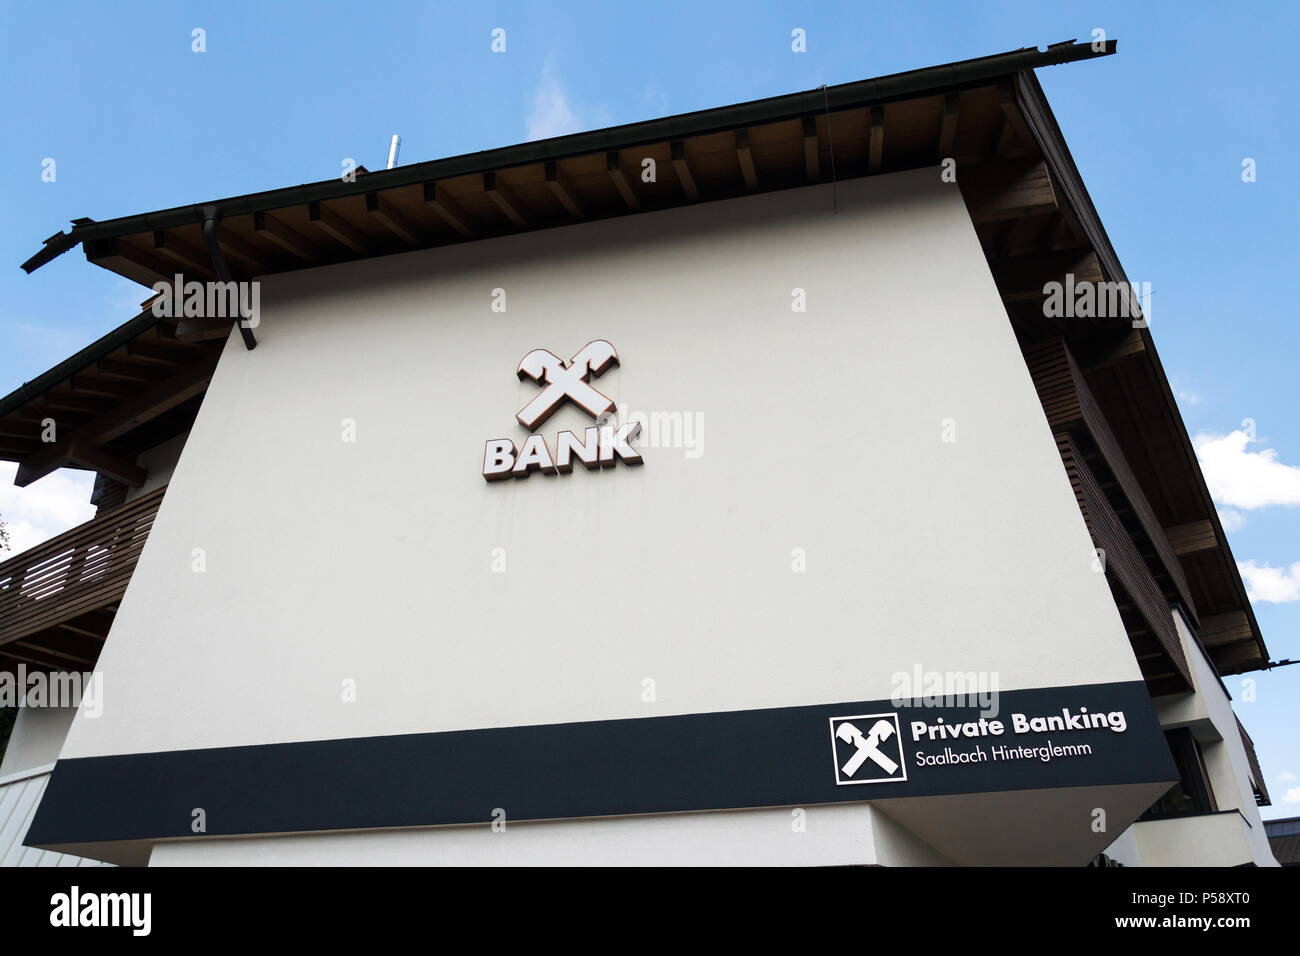 SAALBACH-HINTERGLEMM, AUSTRIA - JUNE 21 2018: Raiffeisen Bank company logo on branch building on June 21, 2018 in Saalbach-Hinterglemm, Austria. Stock Photo